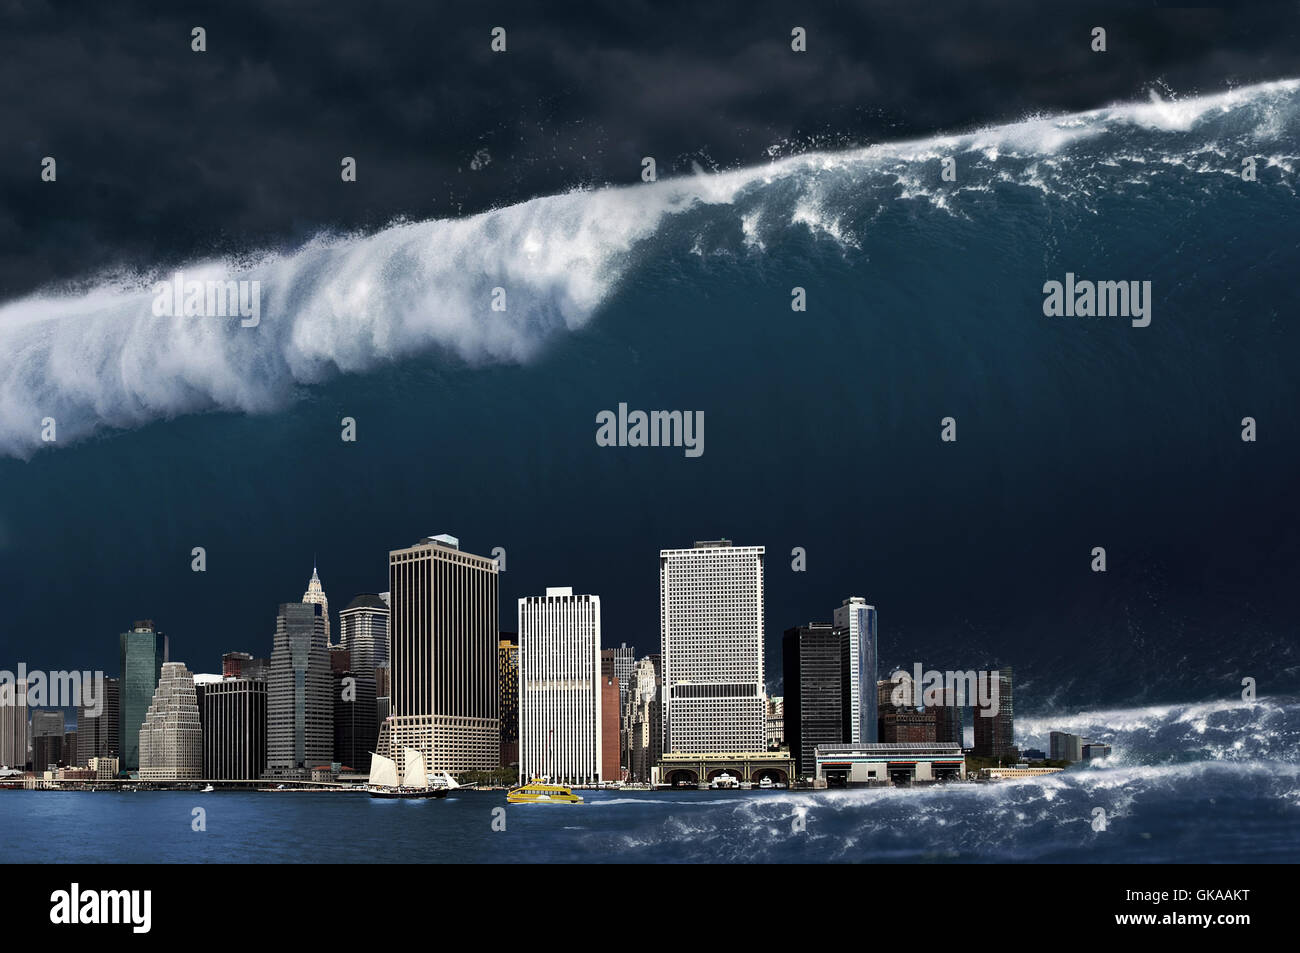 giant wave catastrophe Stock Photo